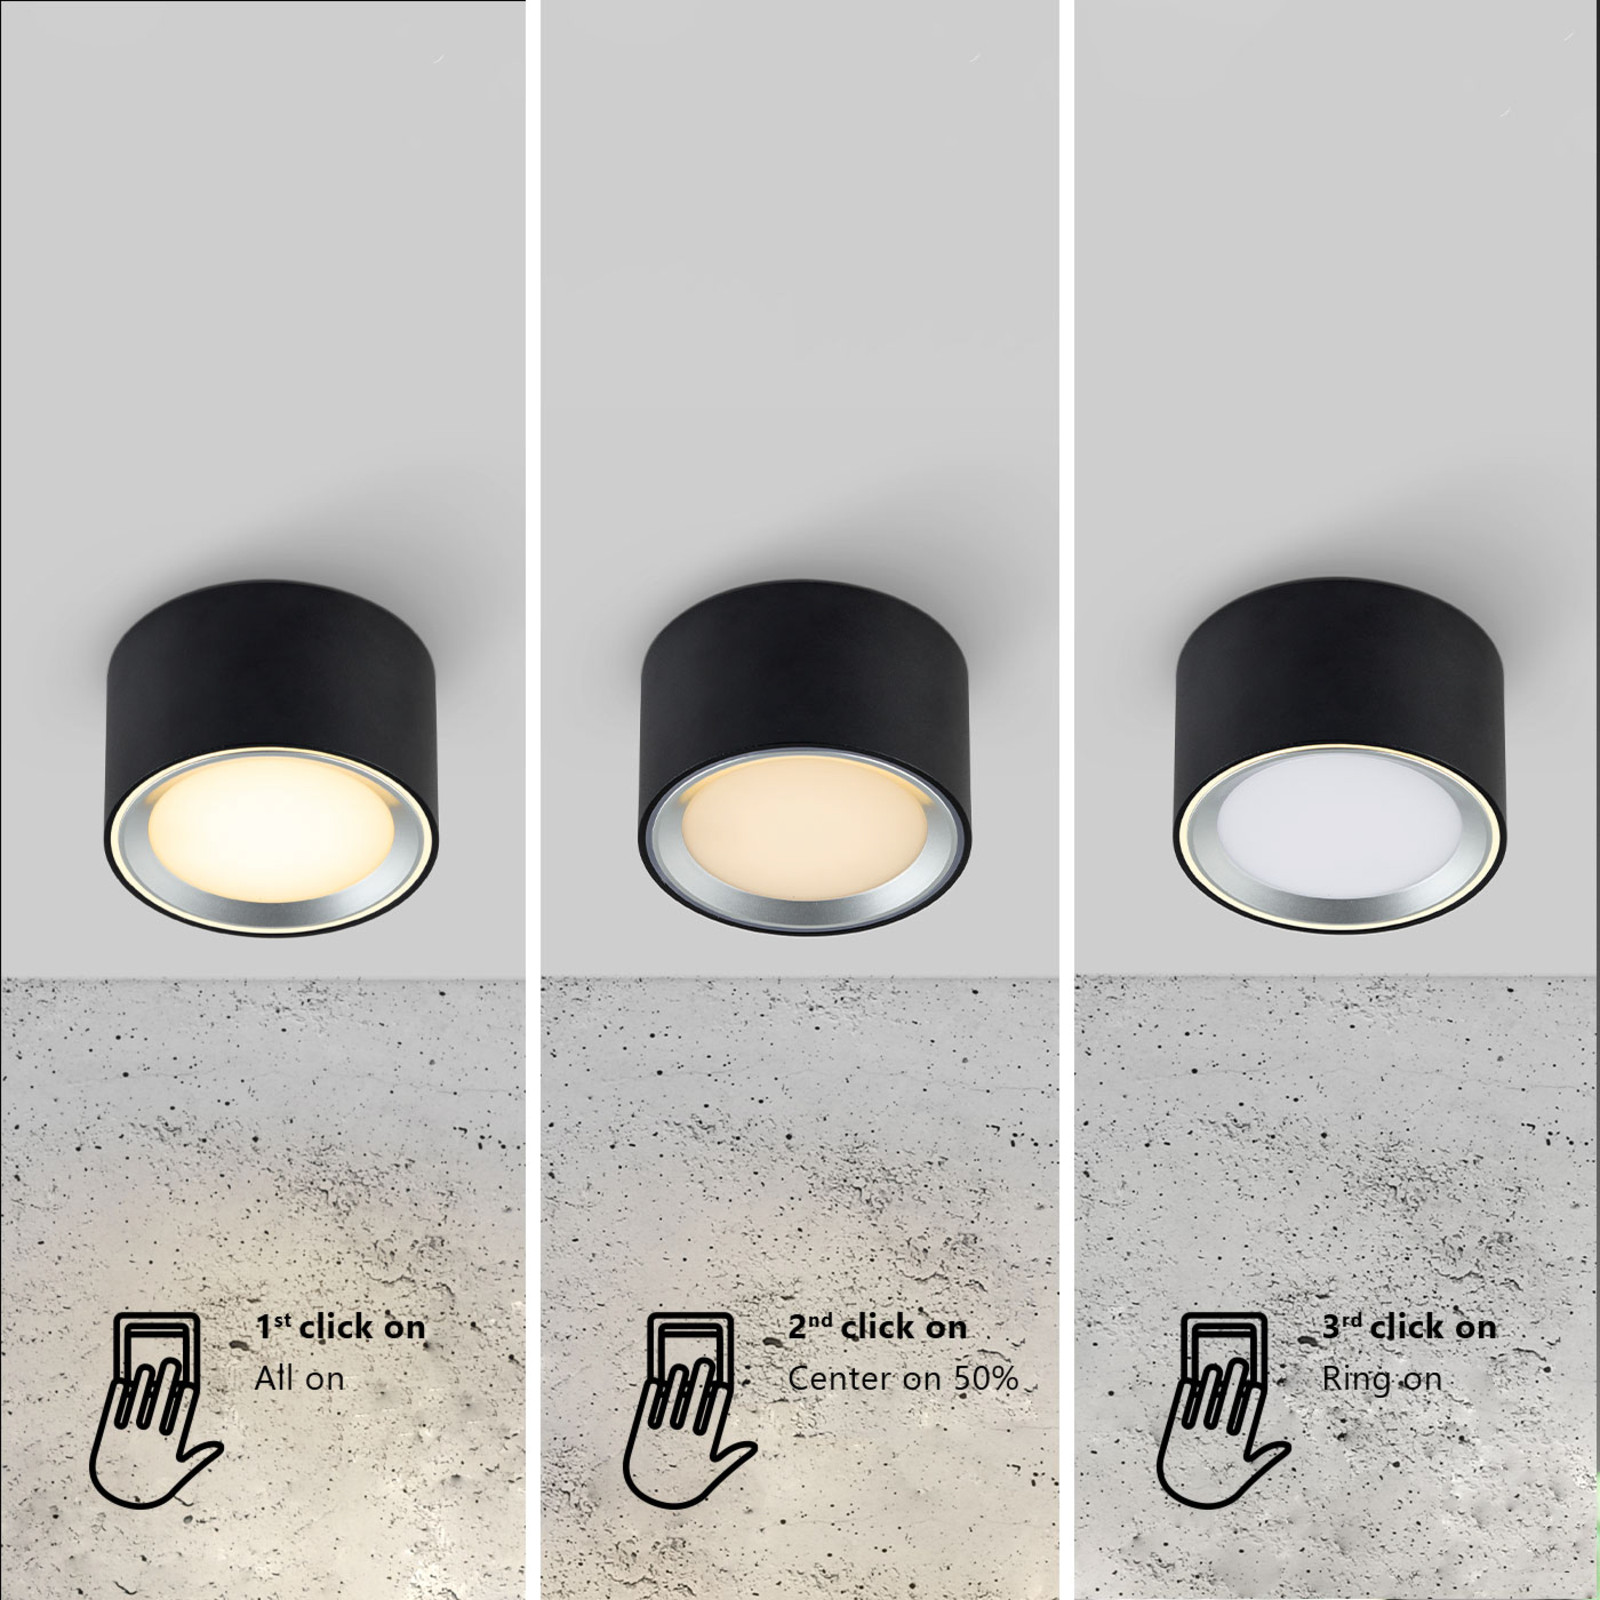 LED downlight Fallon 3-step-dim, černá/ocel